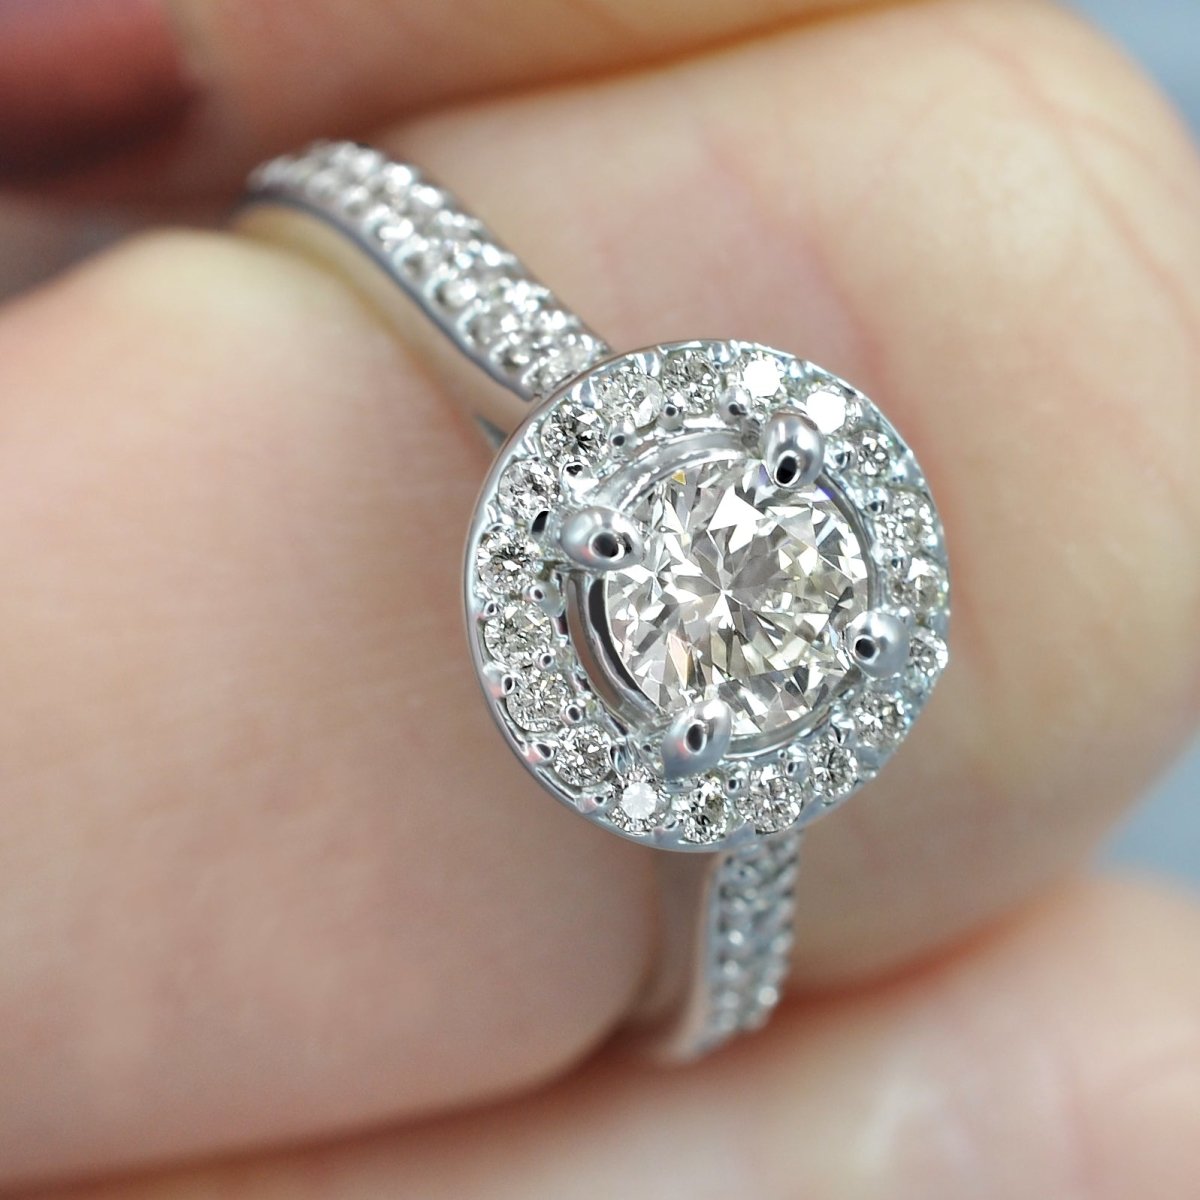 Breathtaking pear shape diamond ring 5.29 ct center